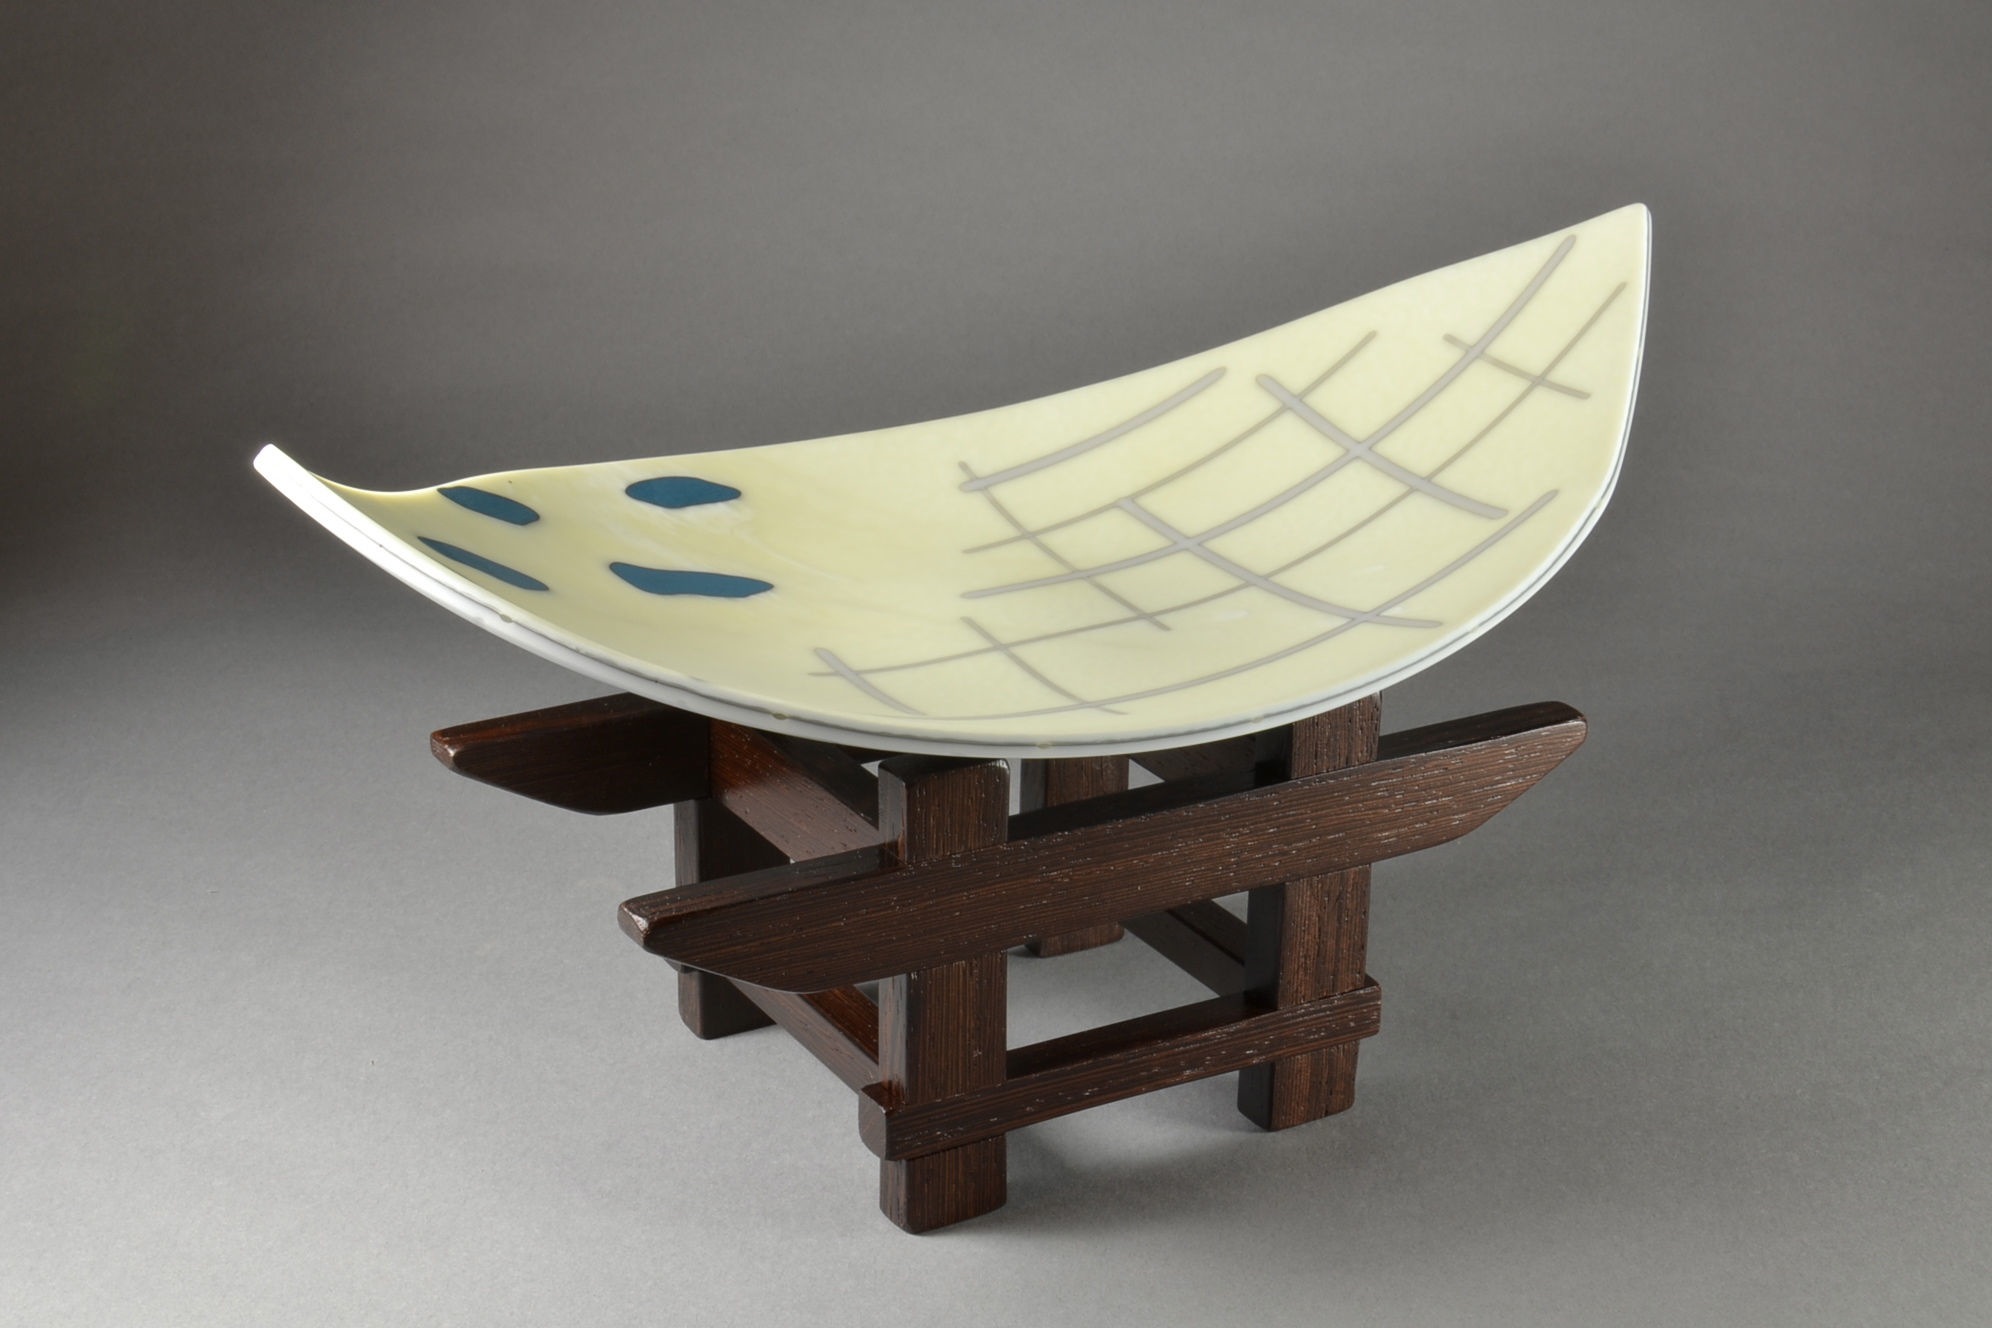 Fused Glass Art Vessel by Darryl Berry